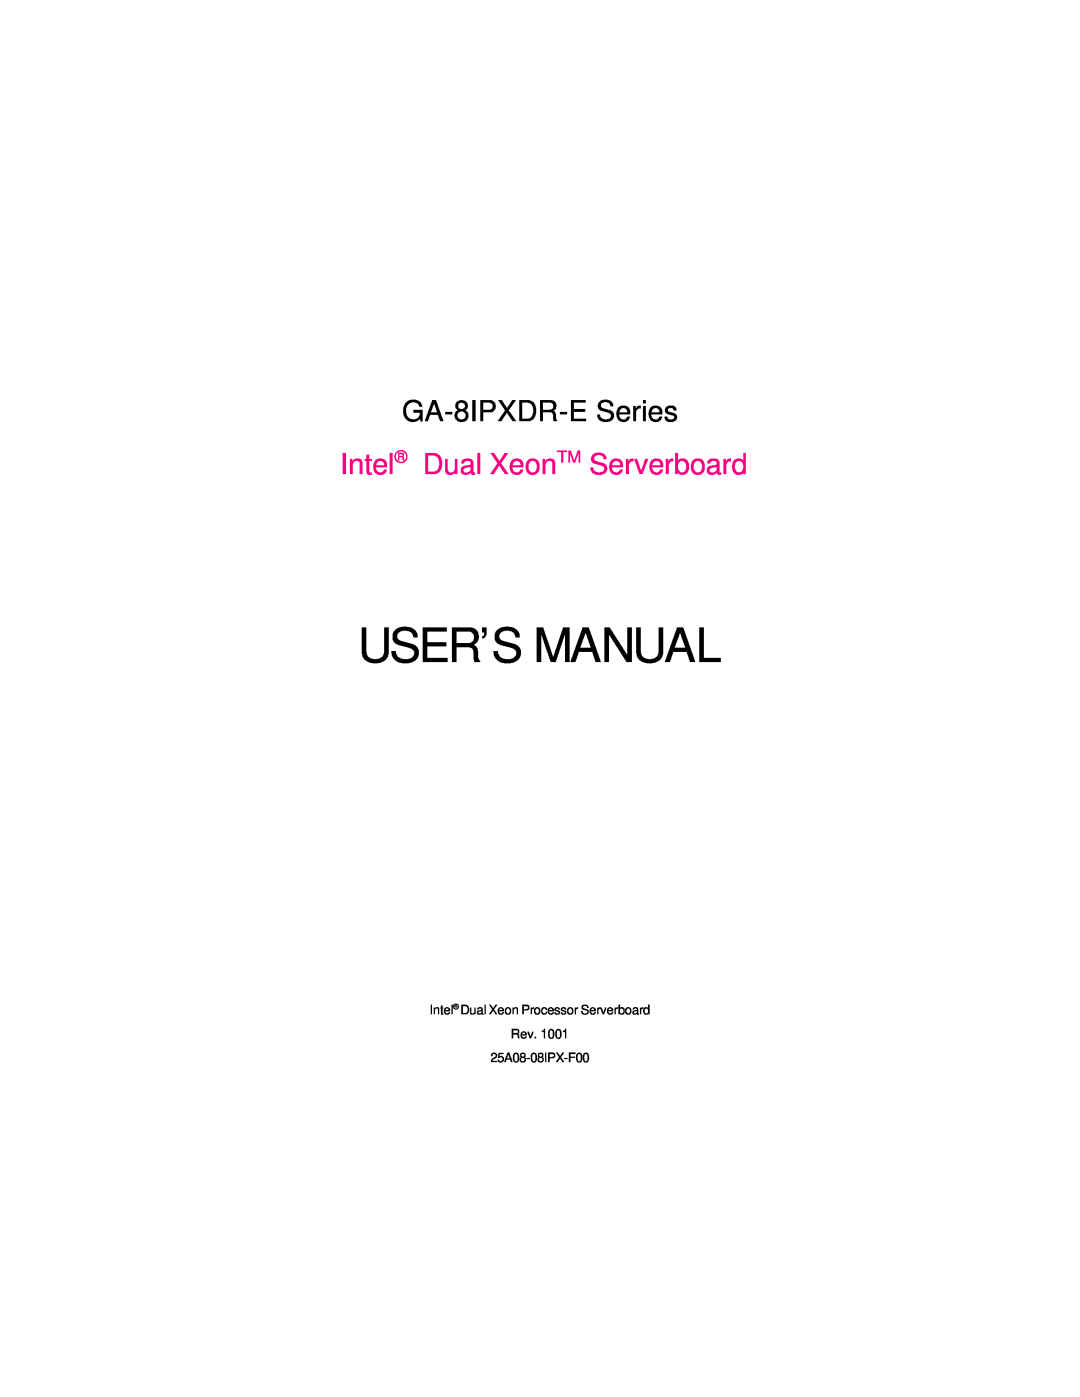 Intel user manual User’S Manual, GA-8IPXDR-E Series, Intel Dual XeonTM Serverboard 